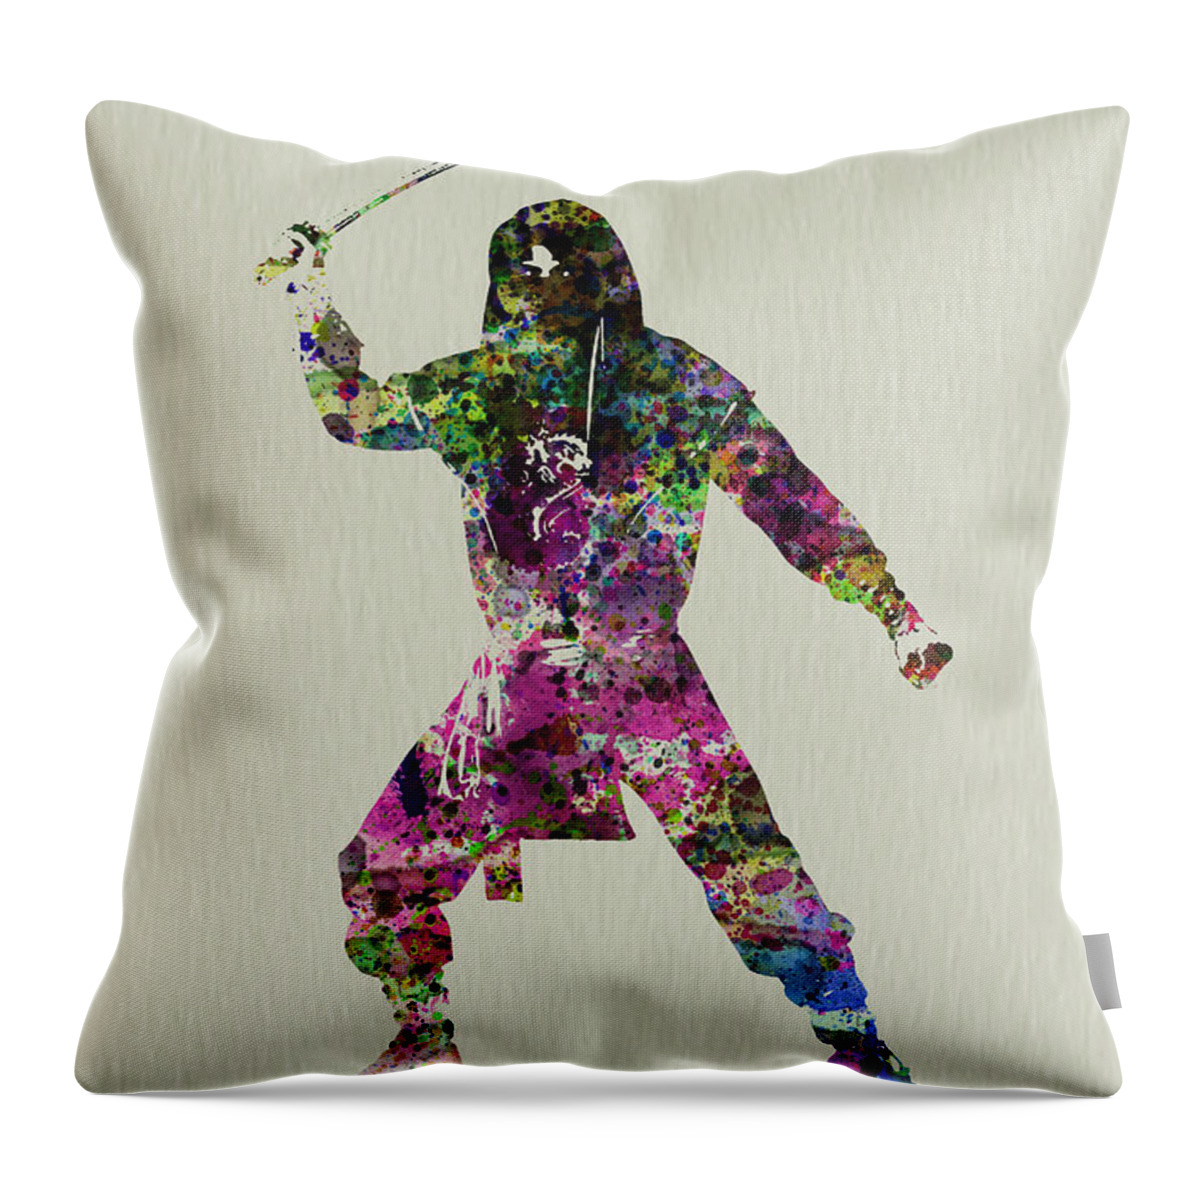 Ninja Throw Pillow featuring the painting Samurai with a sword by Naxart Studio